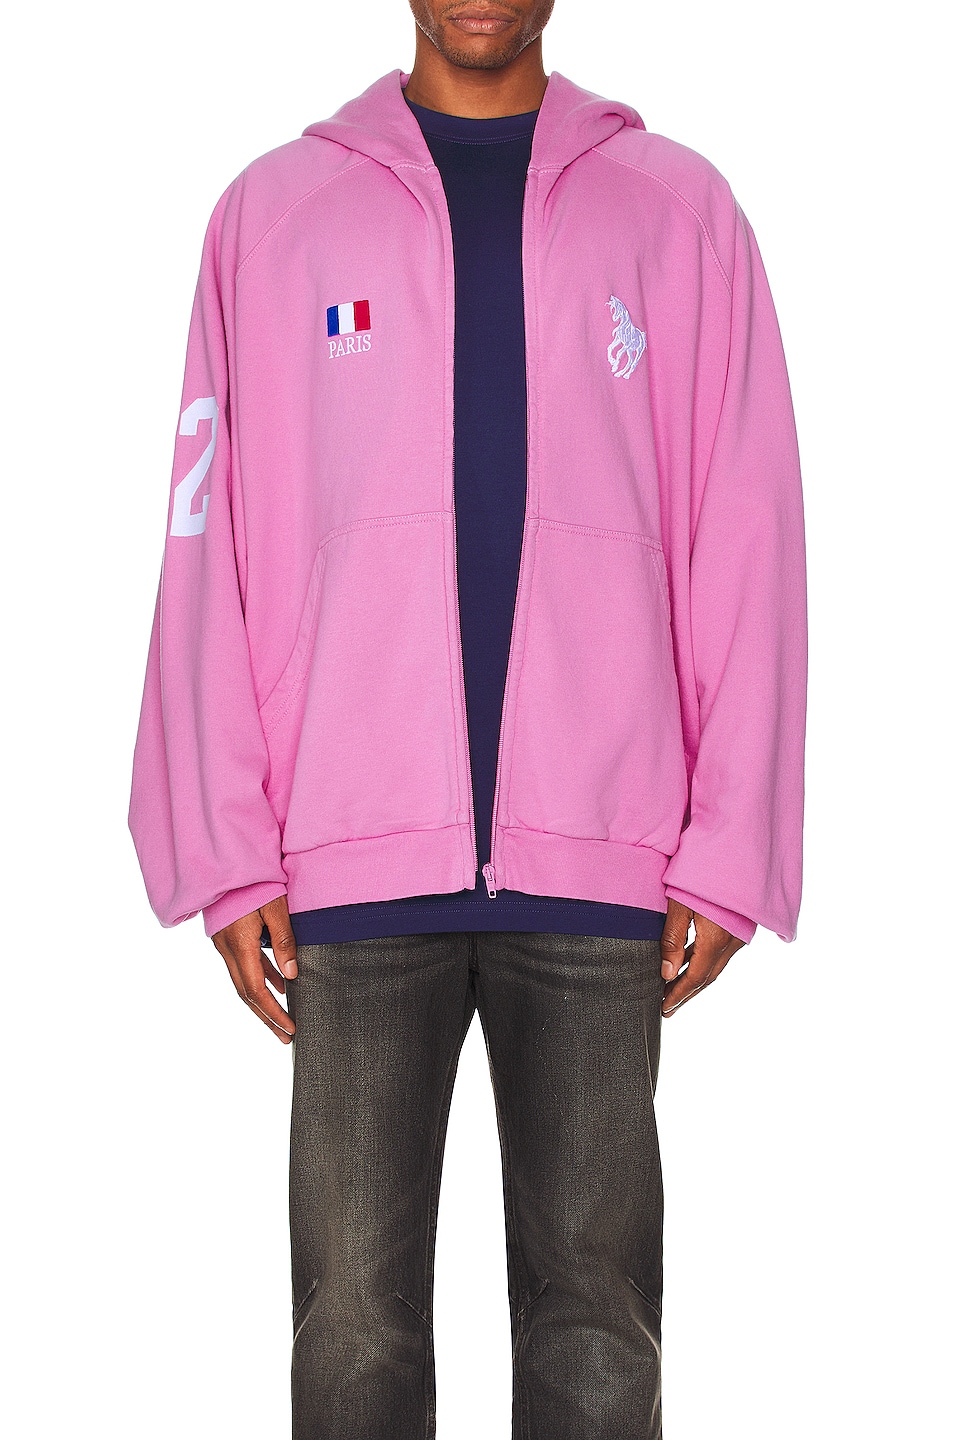 Balenciaga Polo Zip-Up Hoodie in Pink | FWRD